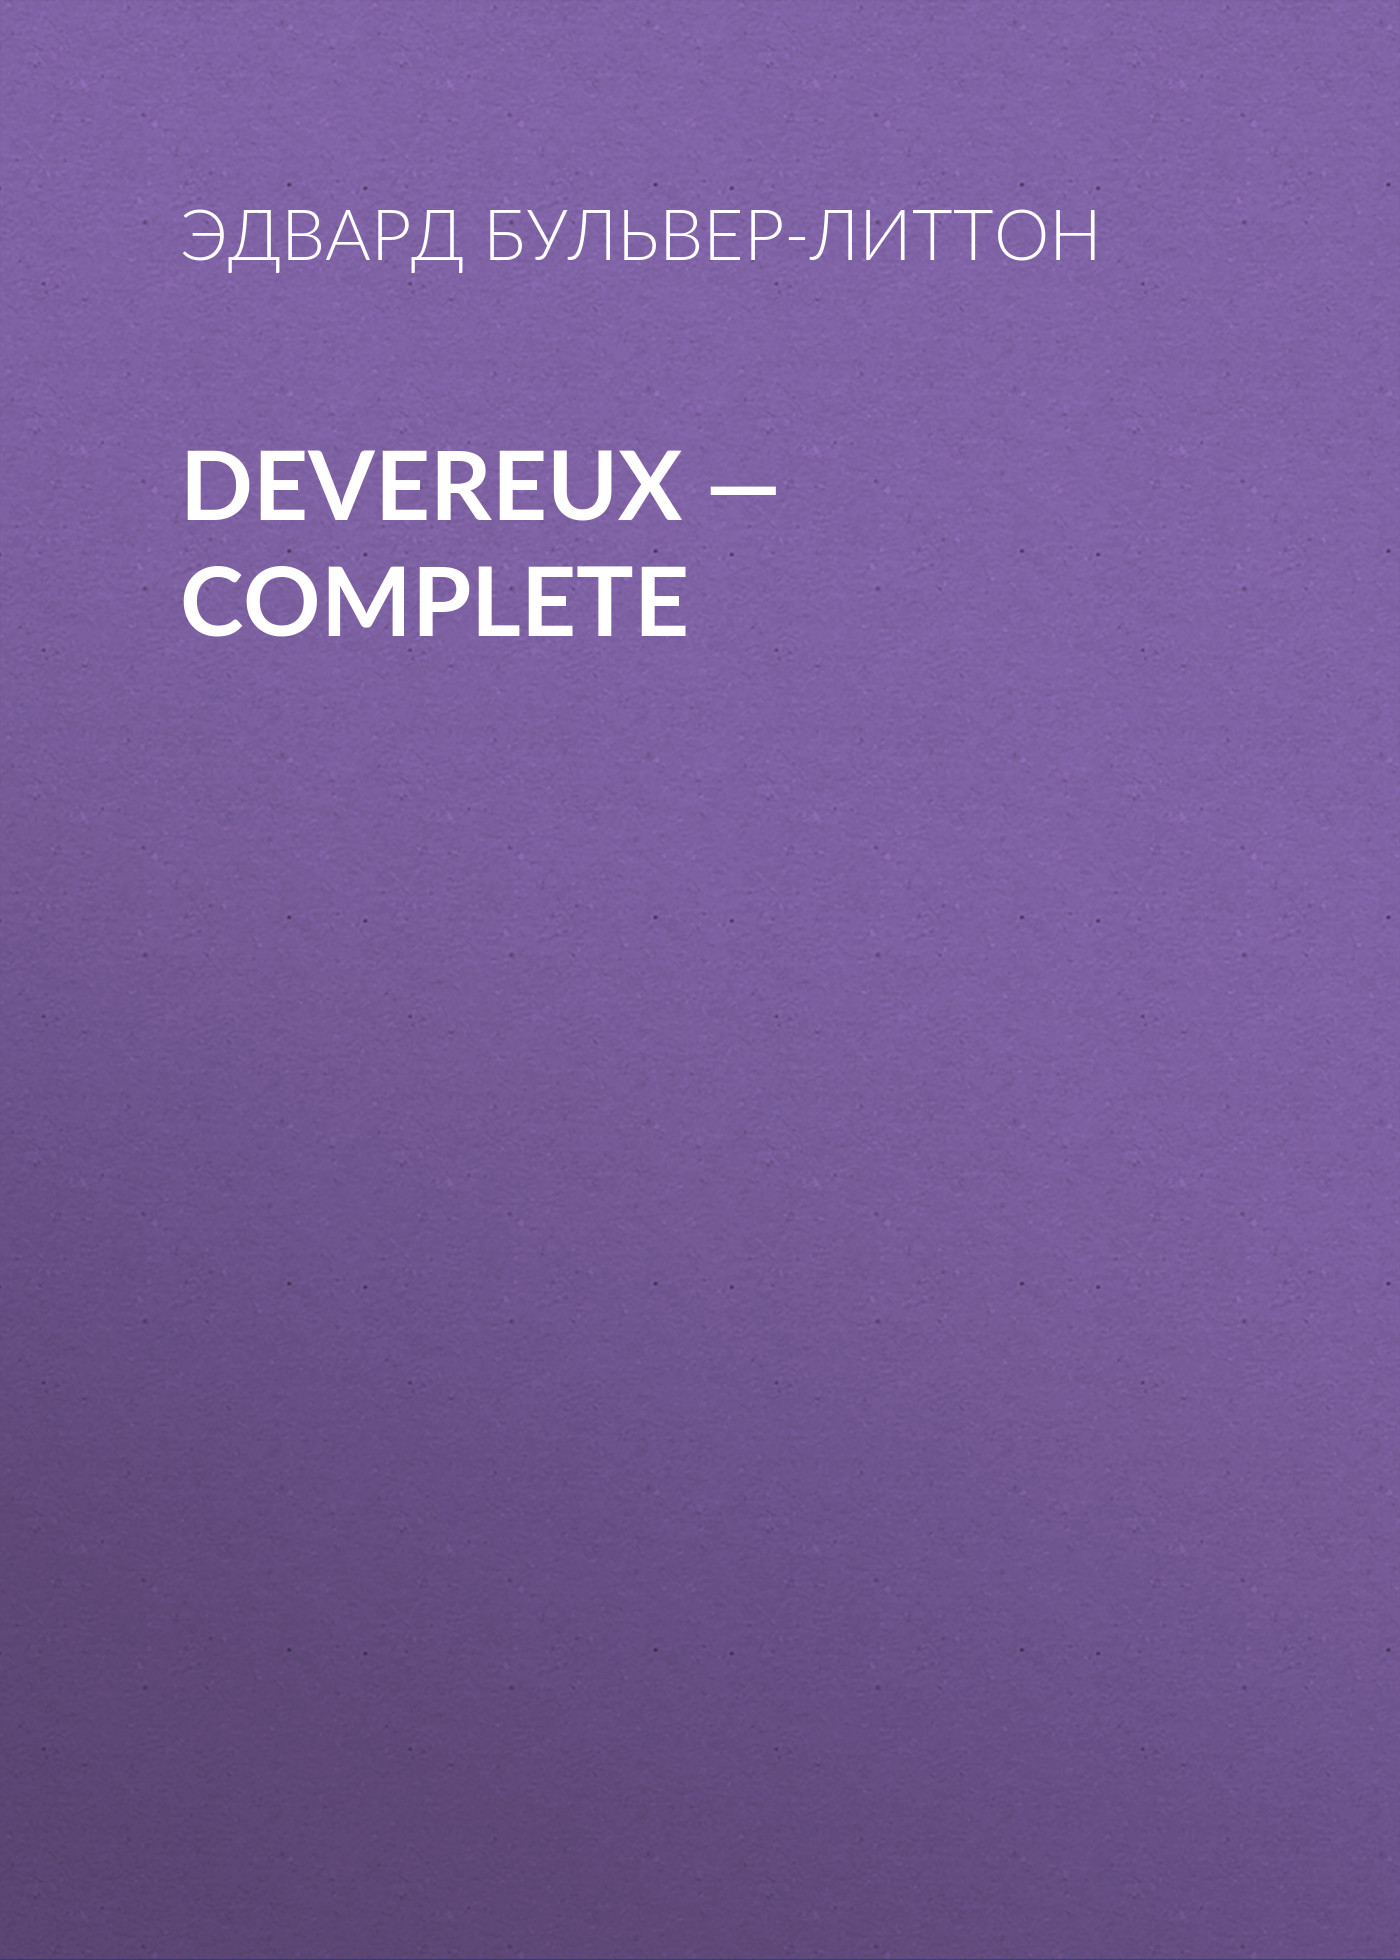 Devereux— Complete